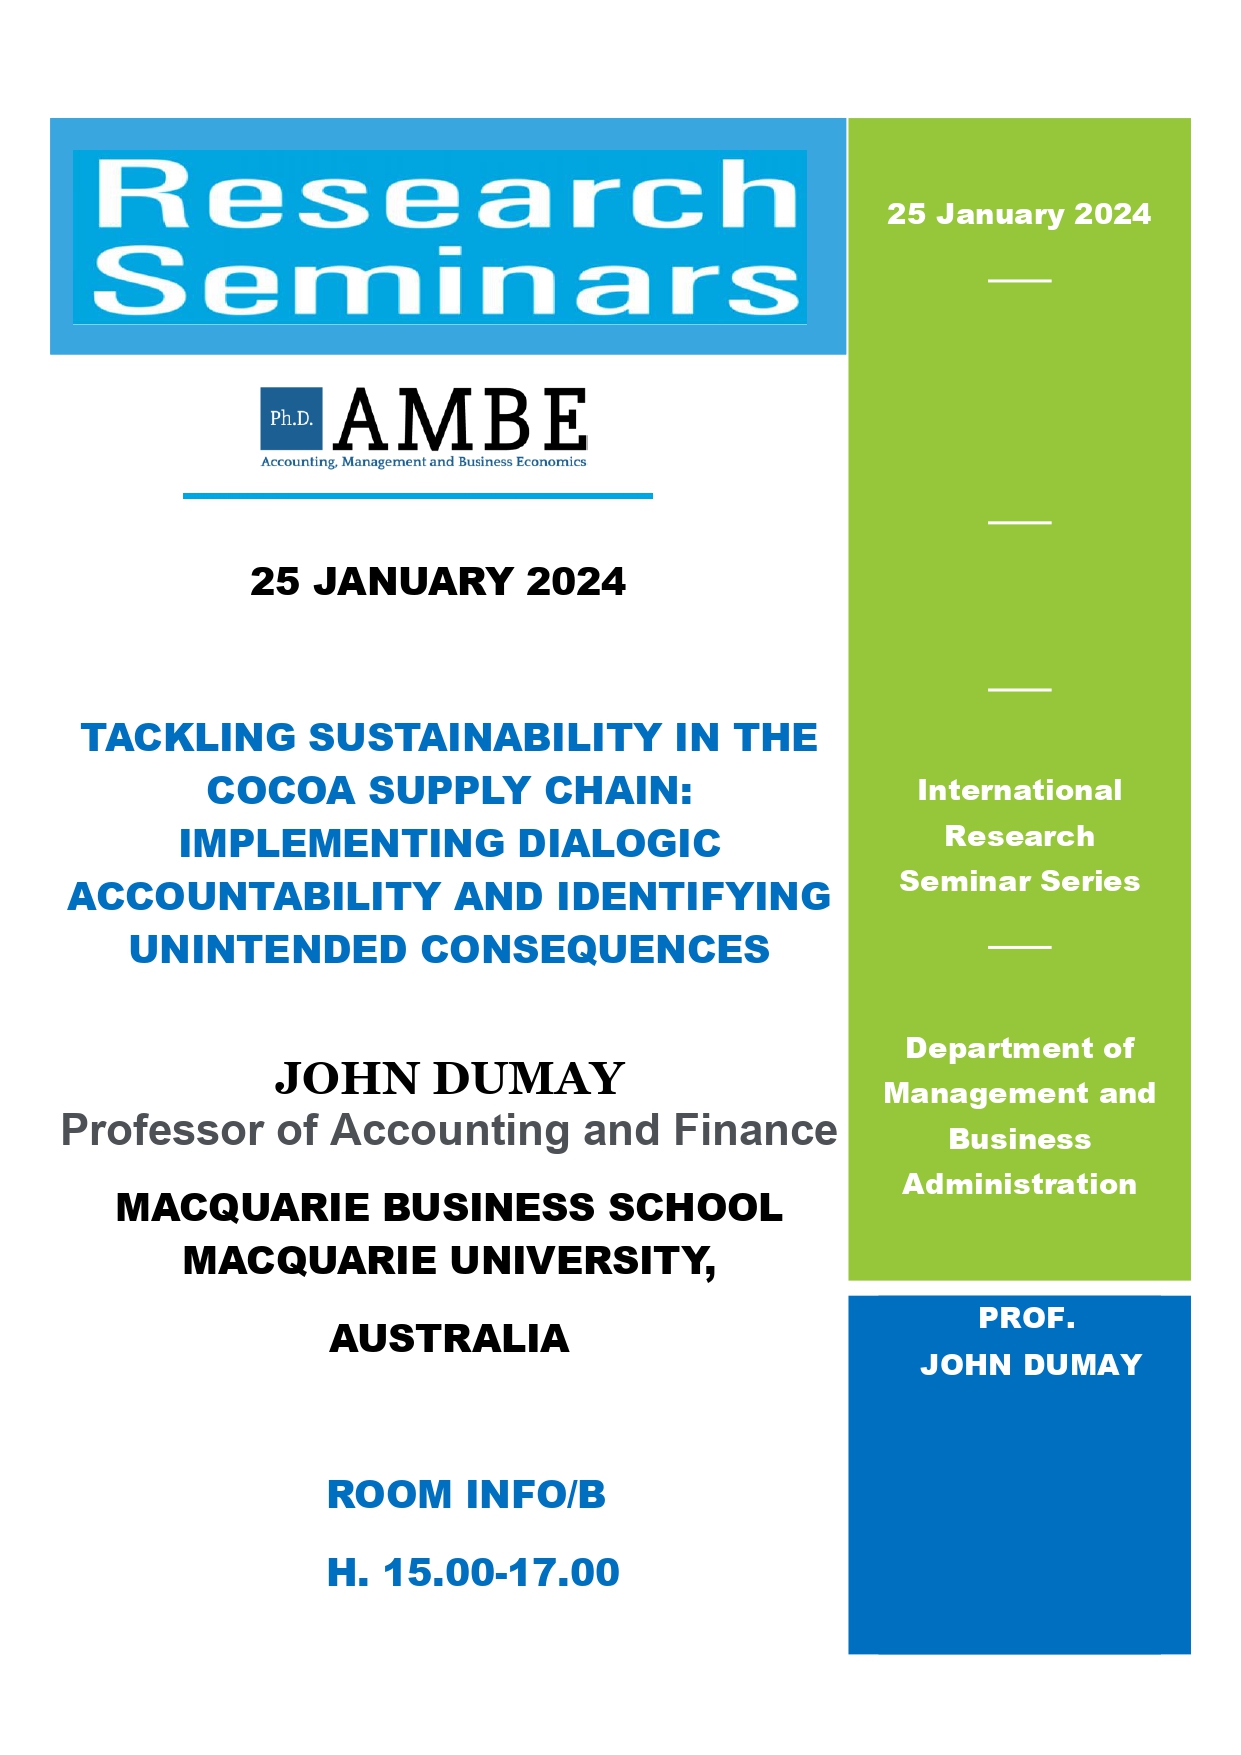 Research_Seminars_Phd_AMBE_UdA John Dumay 25 January 2024_page-0001